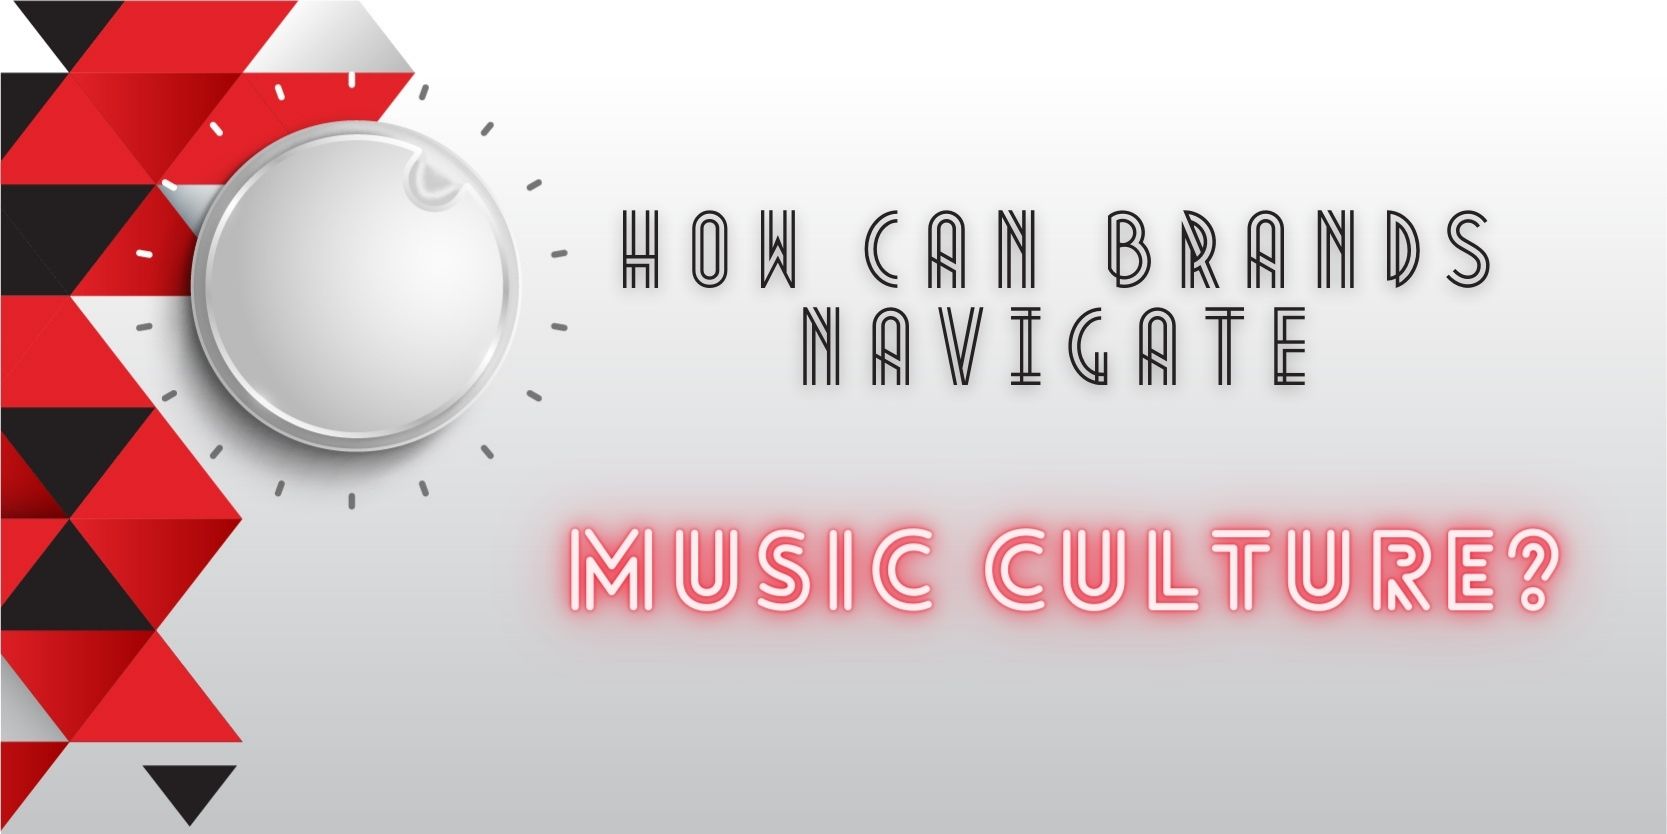 How Can Brands Navigate Music Culture?, Rabbeats Music